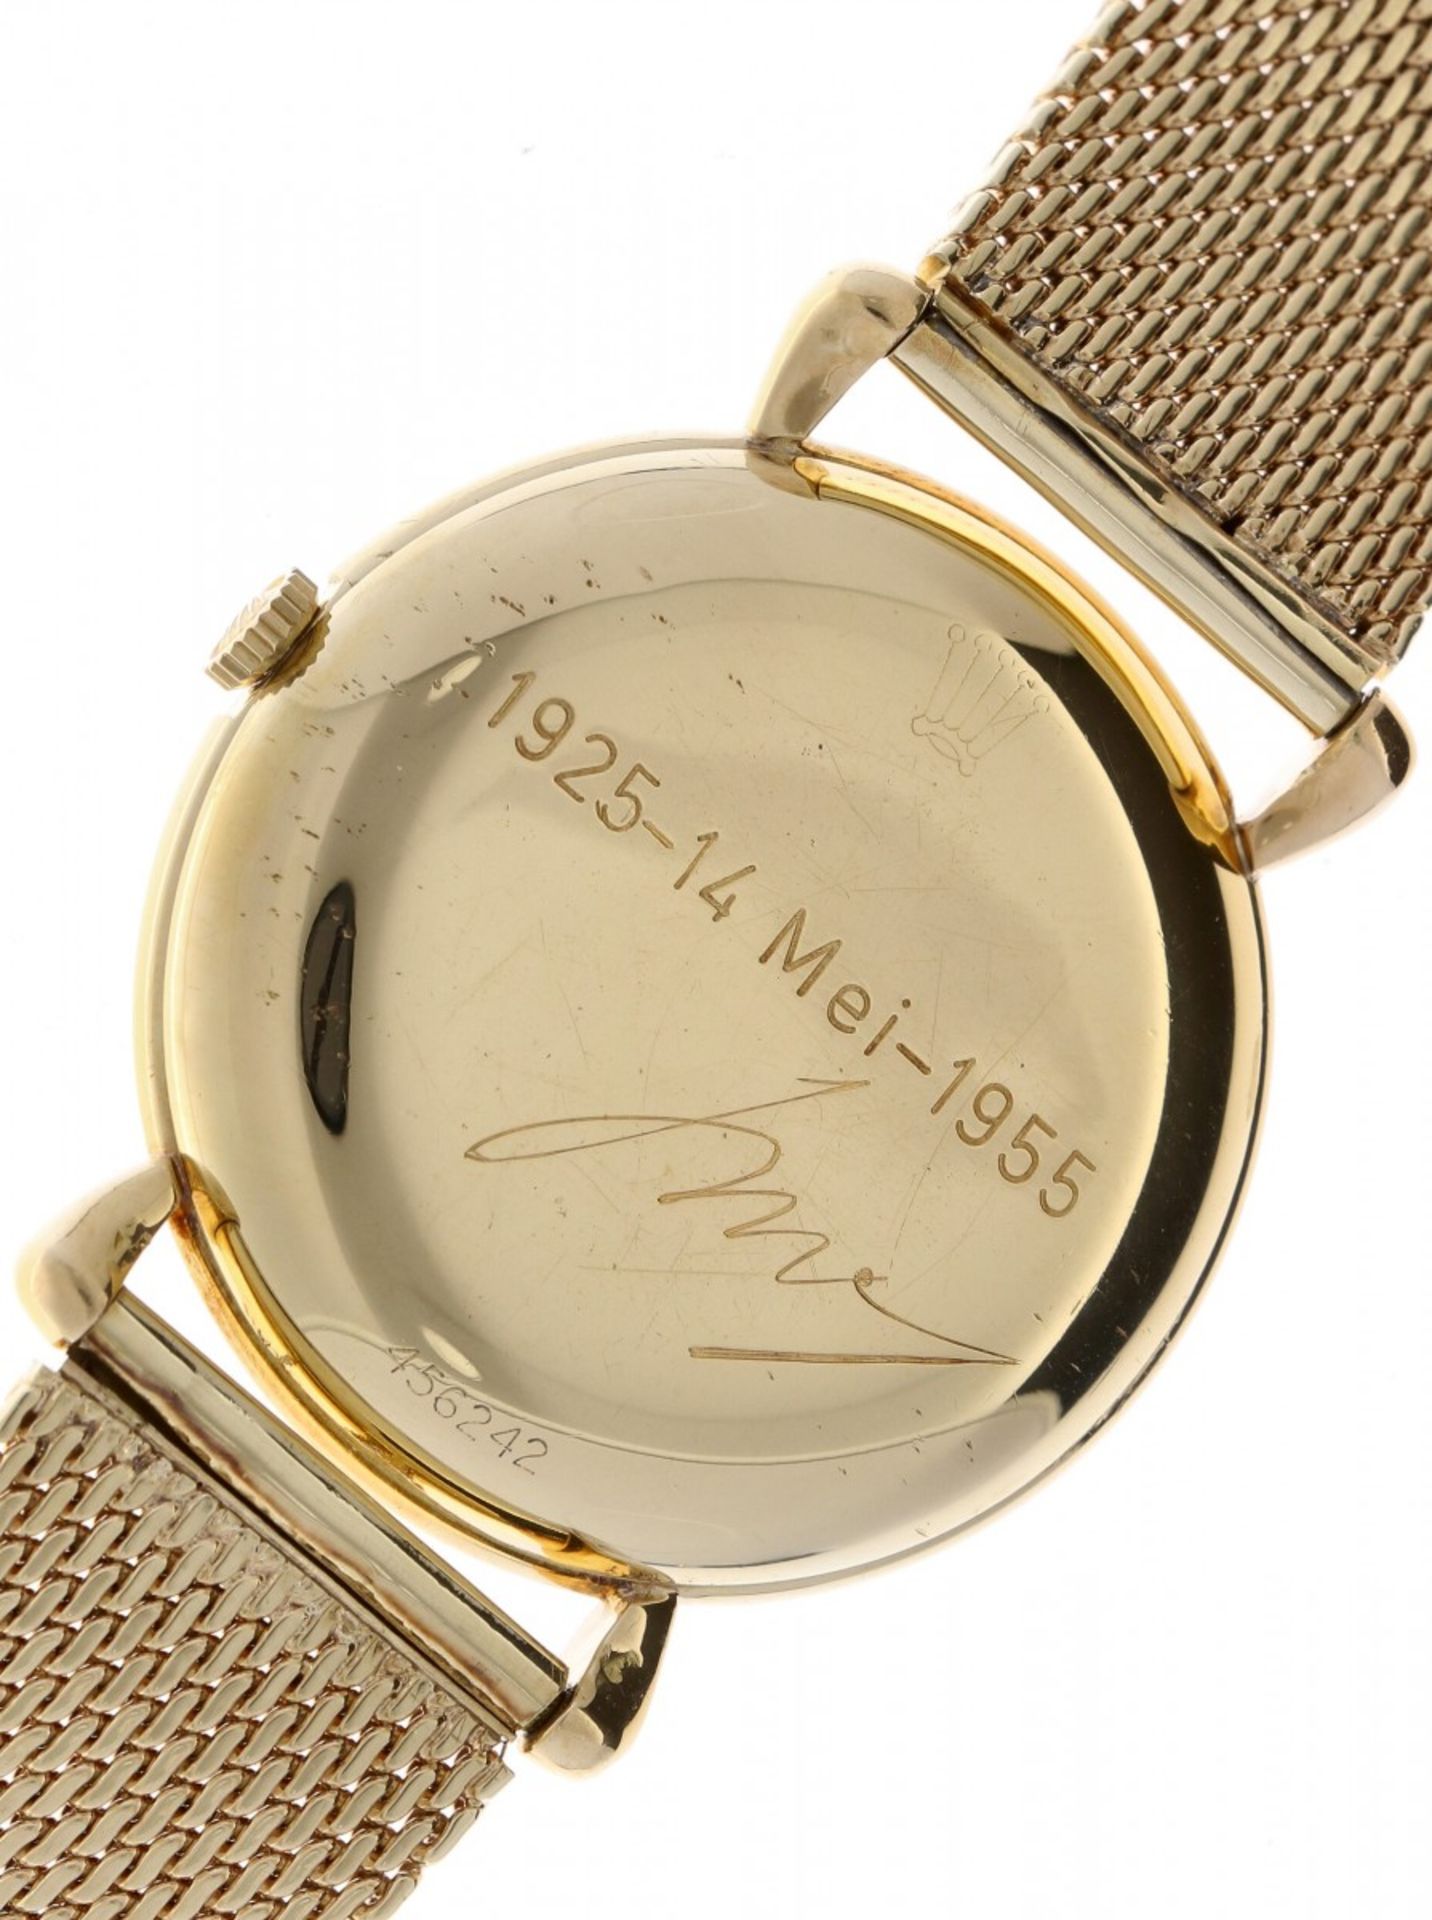 Rolex Precision 4516 - Men's watch - ca. 1950 - Image 7 of 9